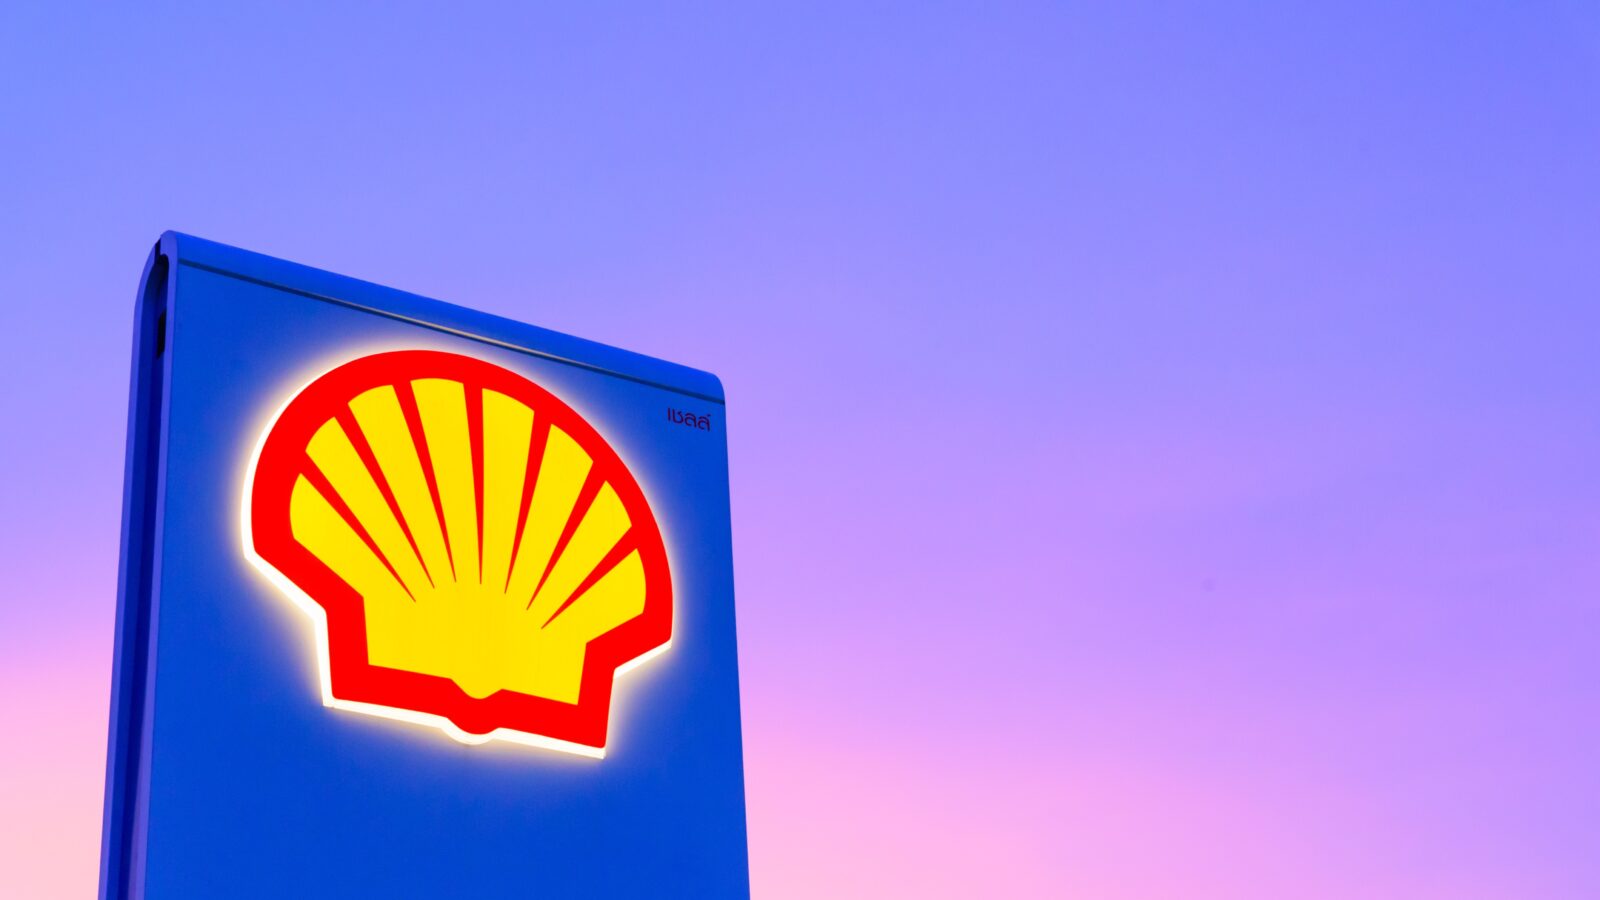 Shell beats guidance and announces $3.5bn buyback scheme